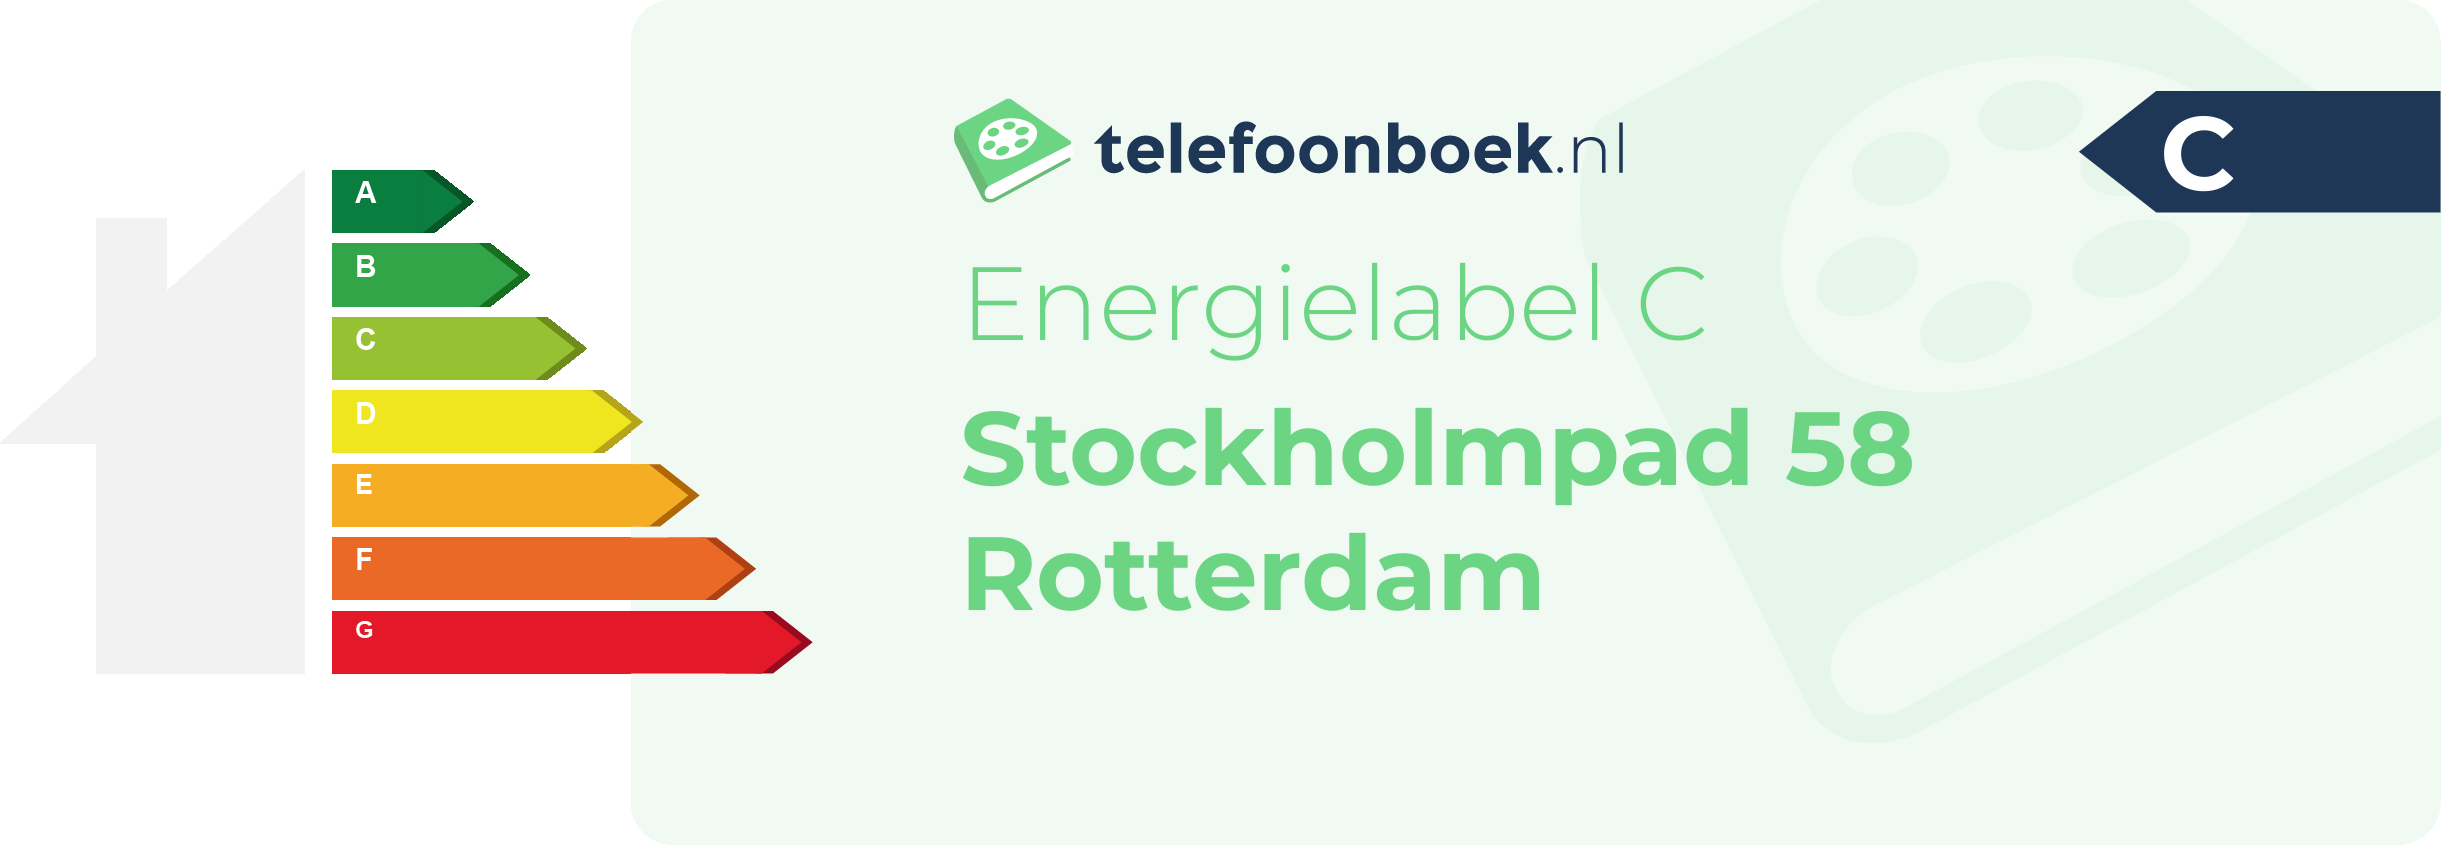 Energielabel Stockholmpad 58 Rotterdam